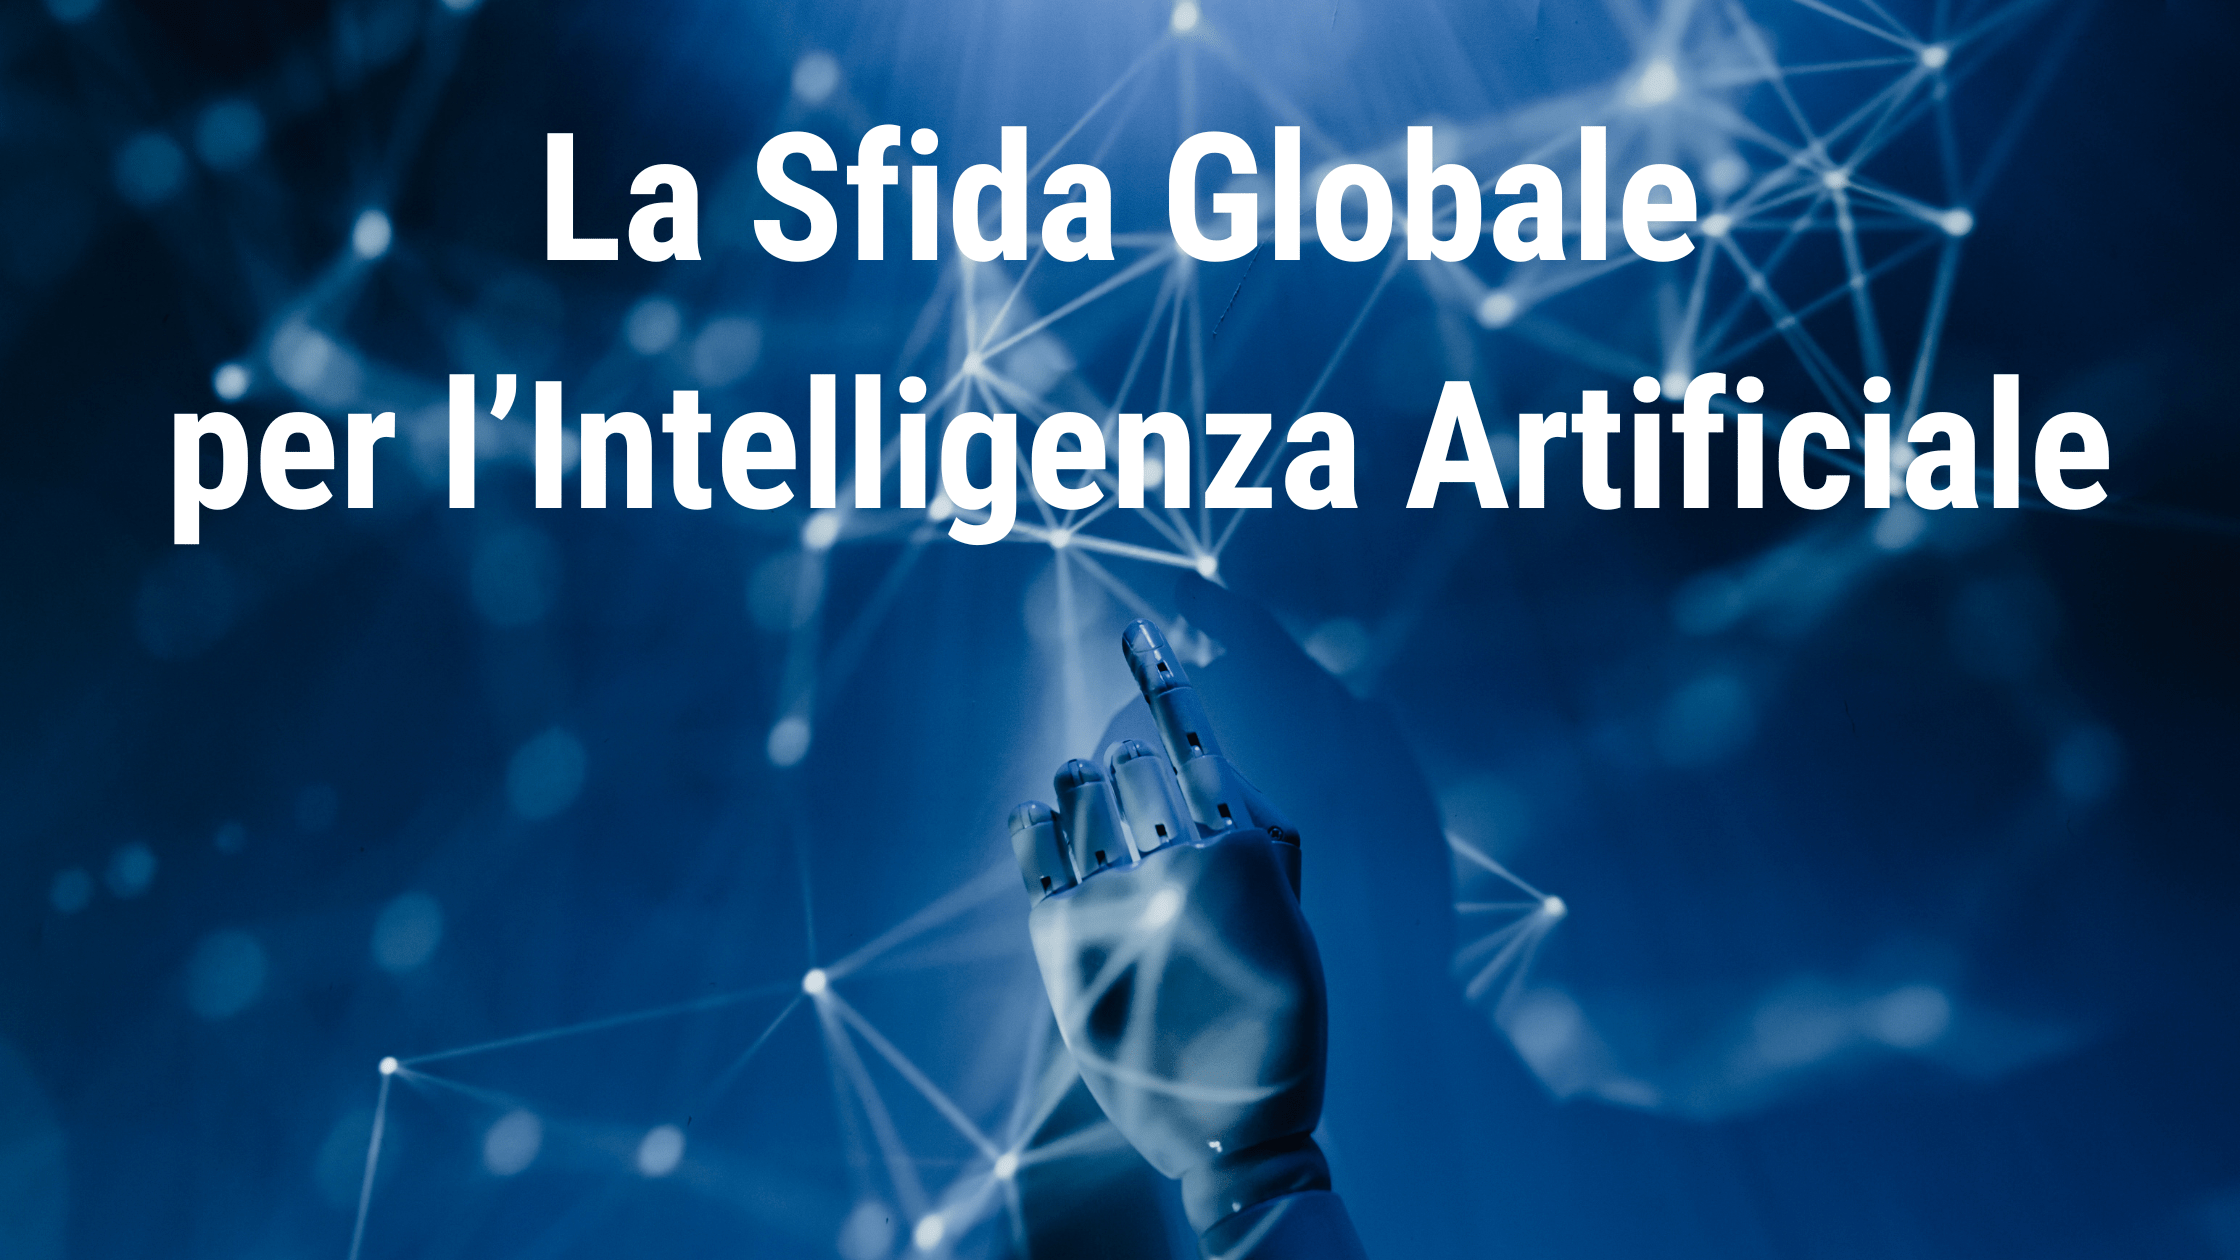 Sfida Globale per l'intelligenza artificiale